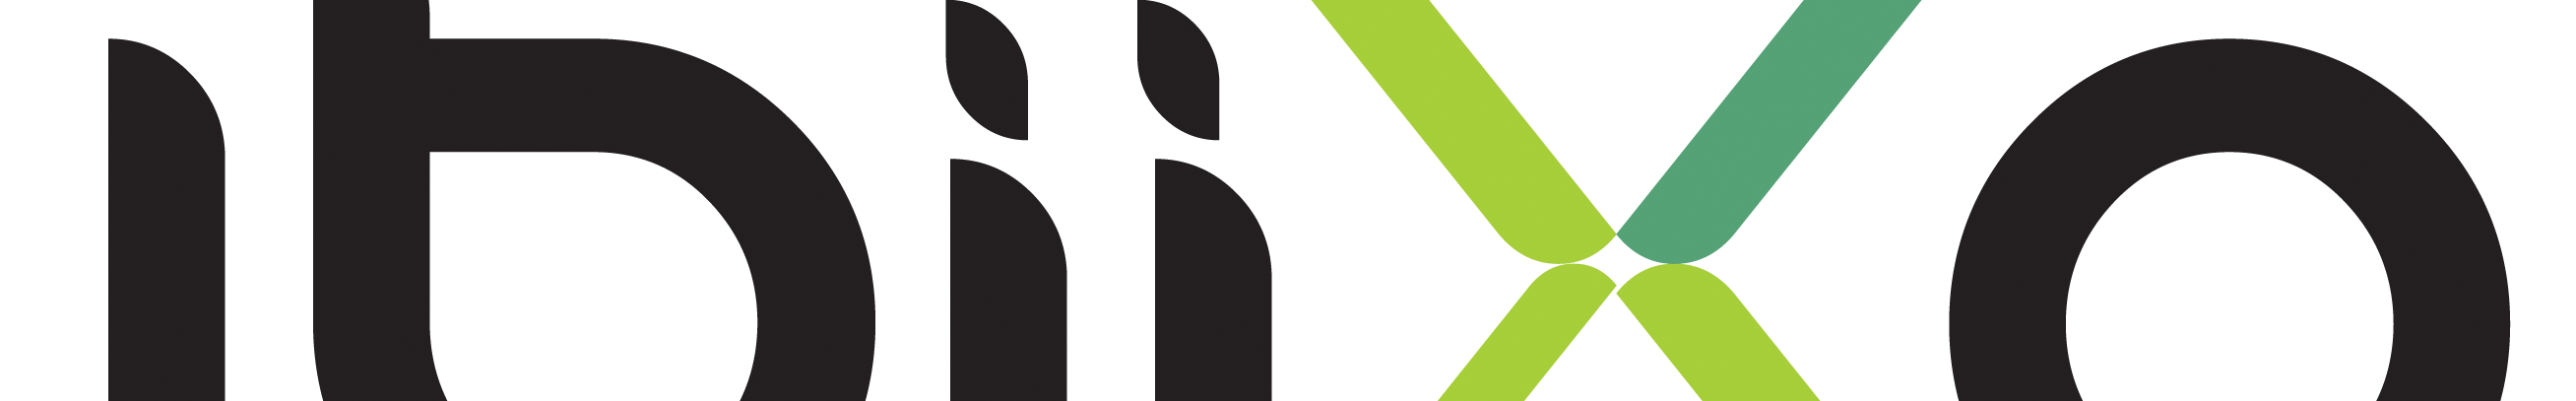 Banner profilu uživatele Ibiixo Technologies